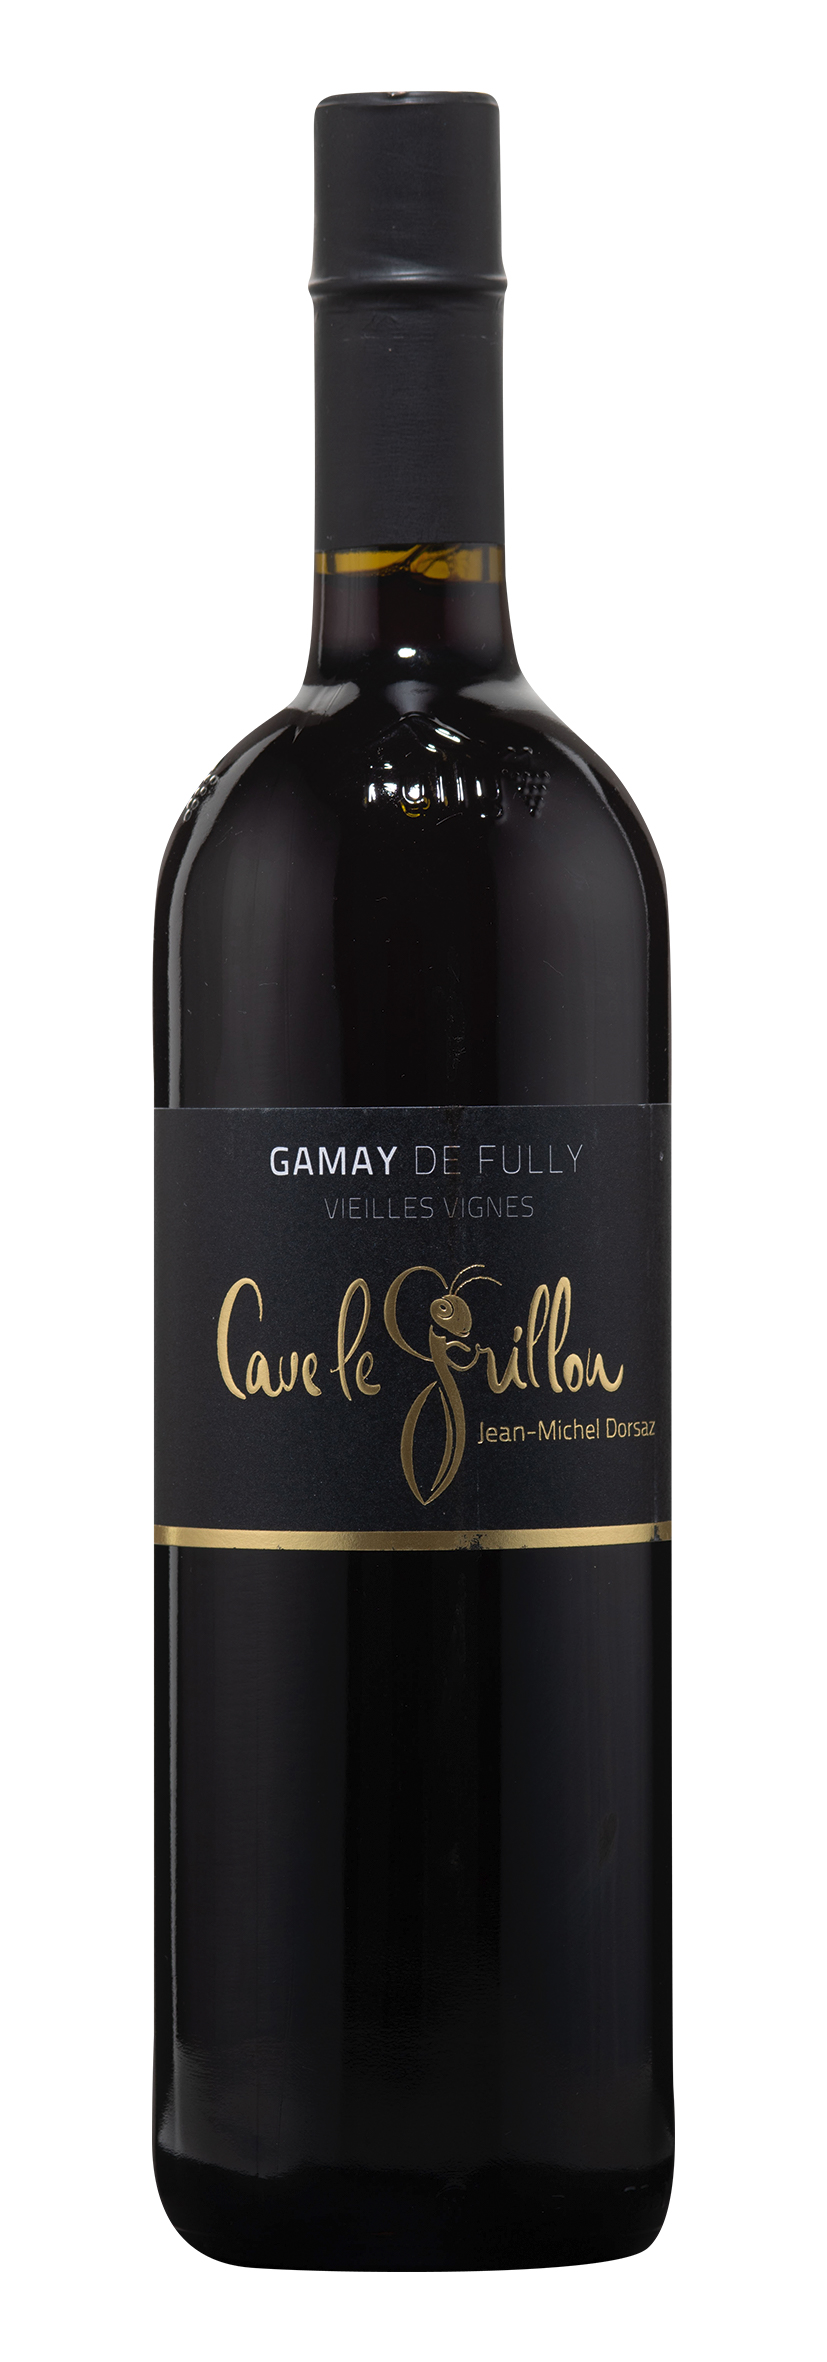 Gamay de Fully Vieilles Vignes 2018